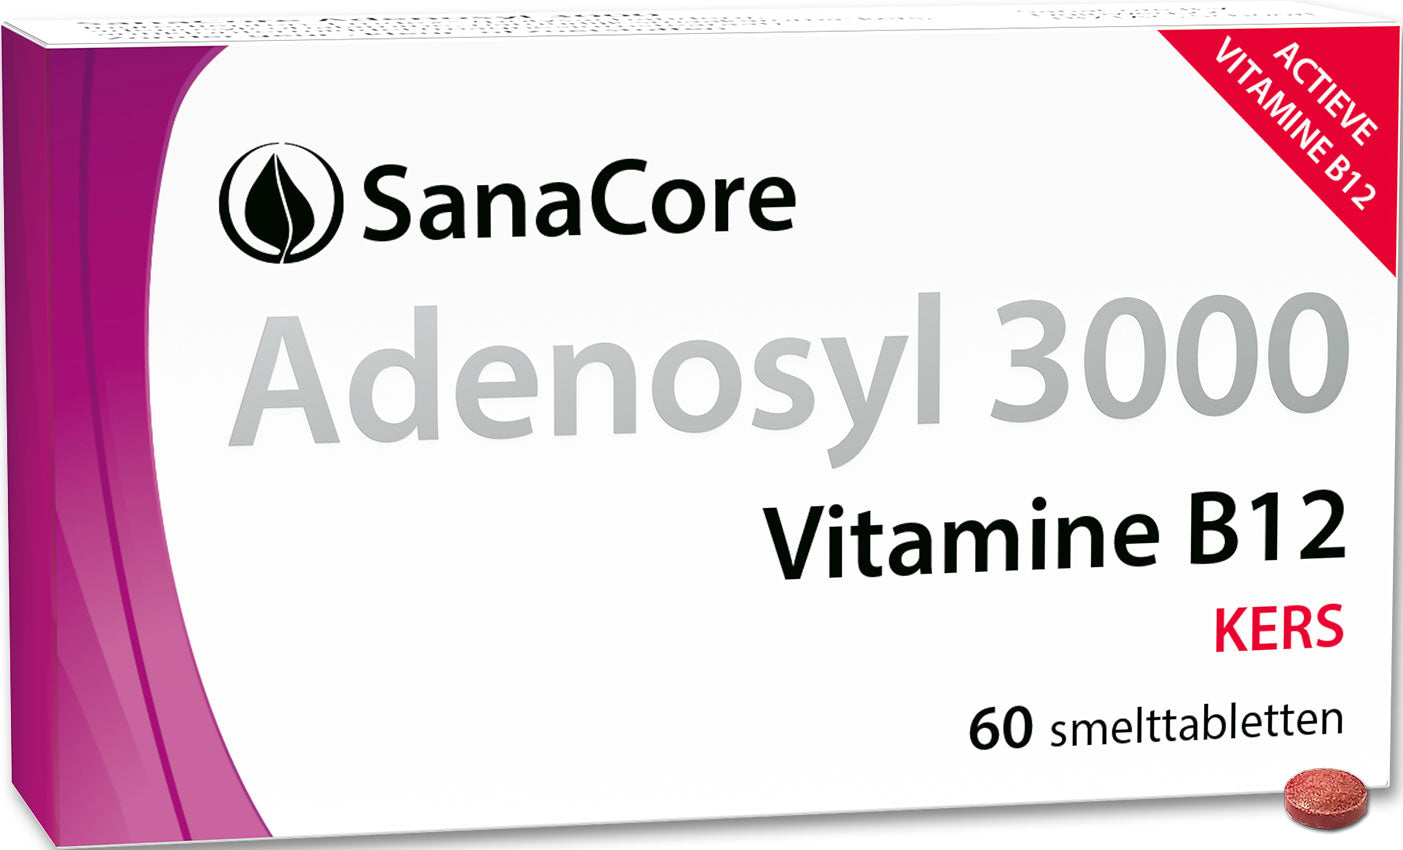 SanaCore Adenosyl 3000 Vitamine B12 (zonder foliumzuur)